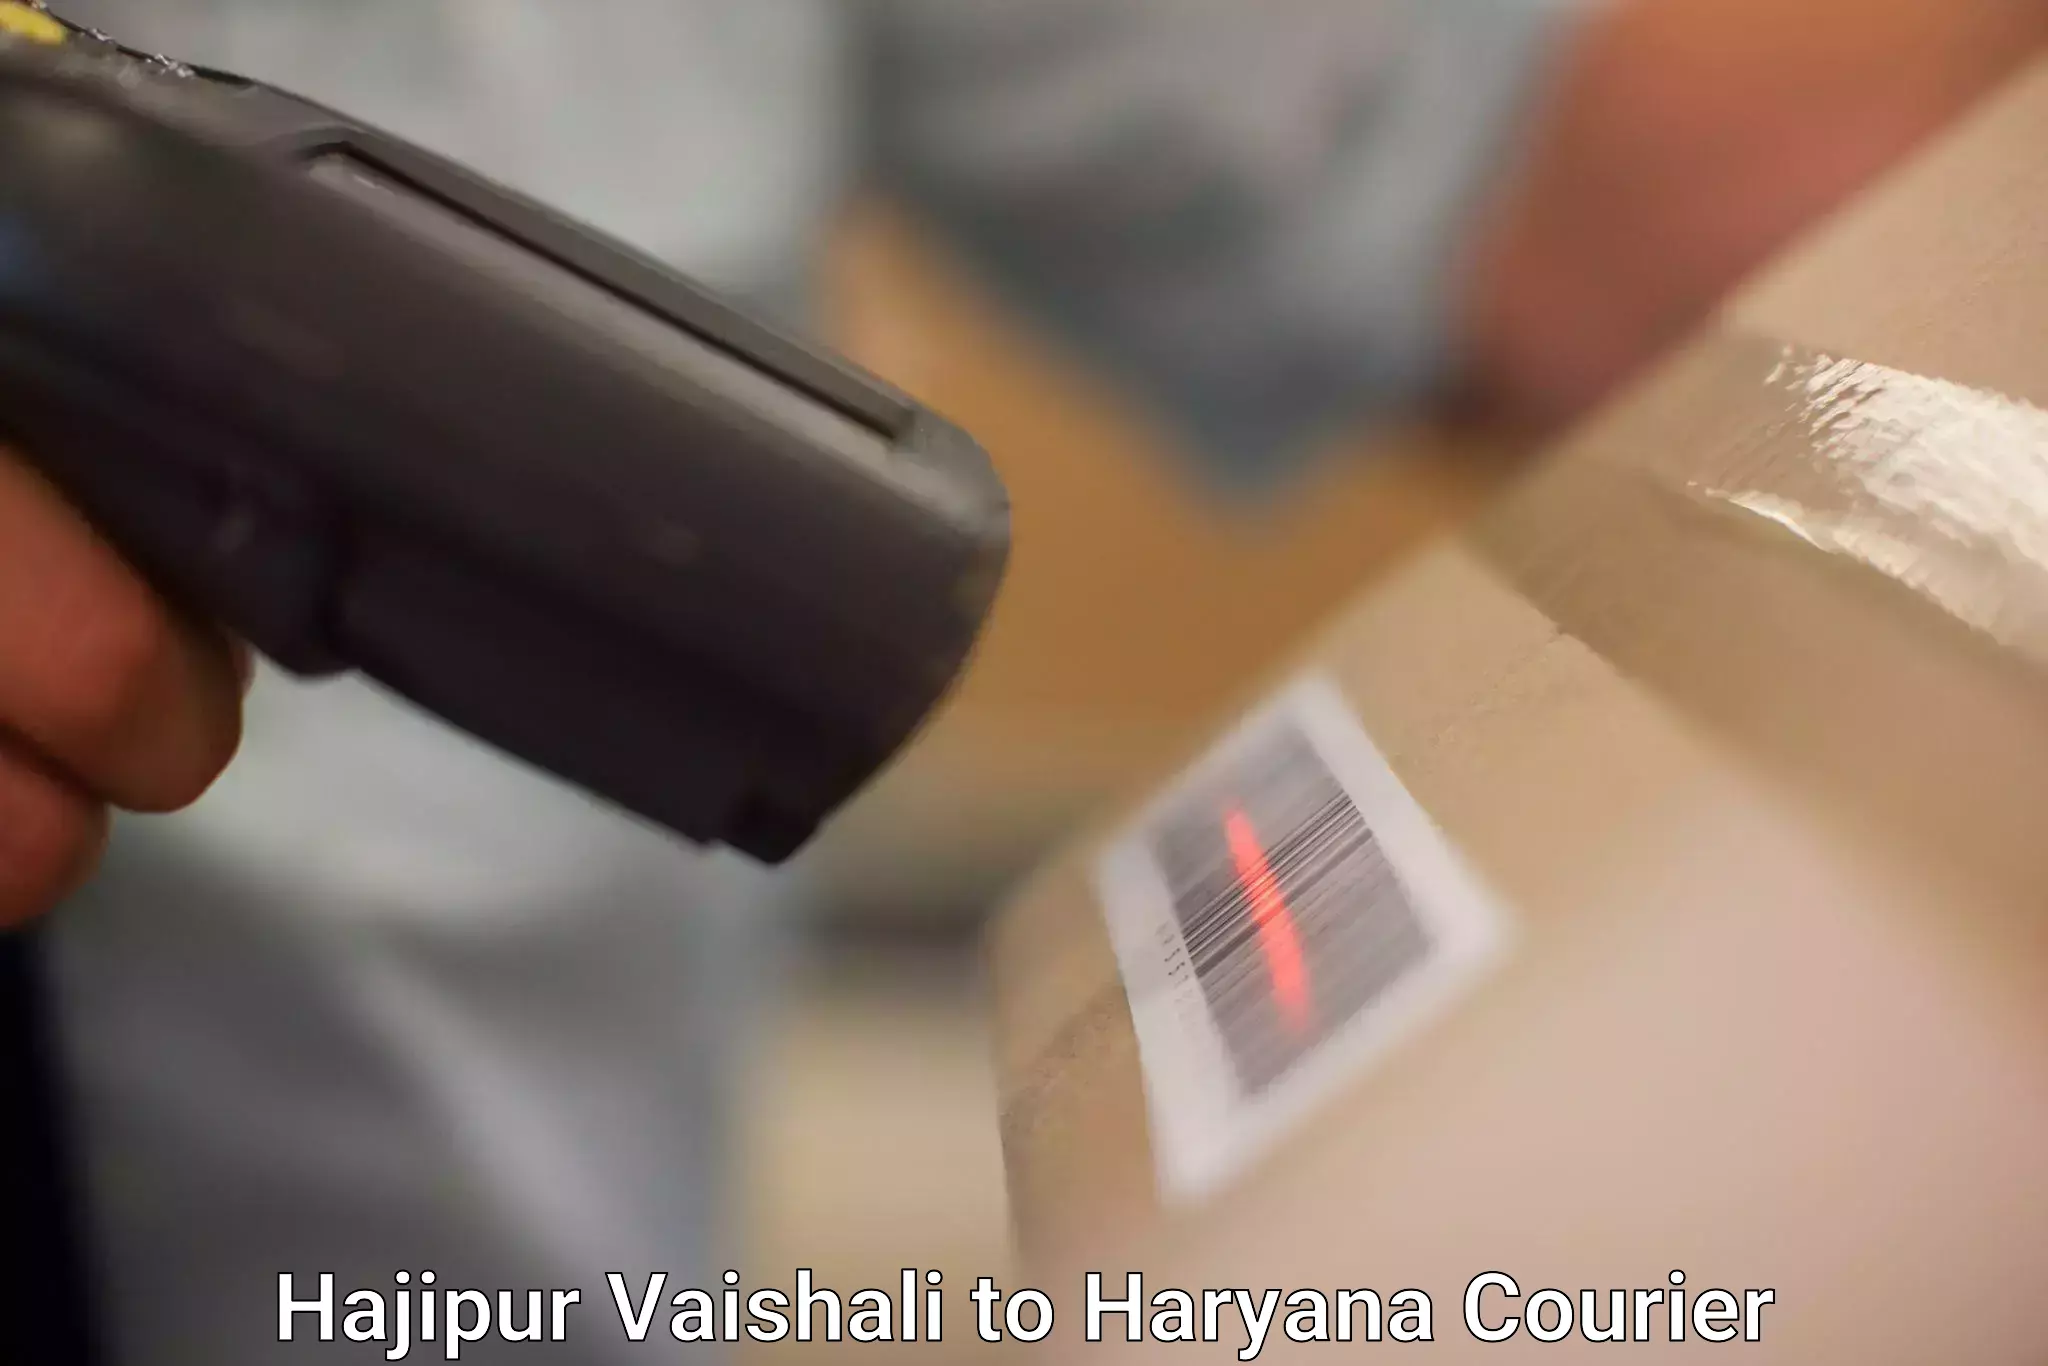 Local delivery service Hajipur Vaishali to Haryana